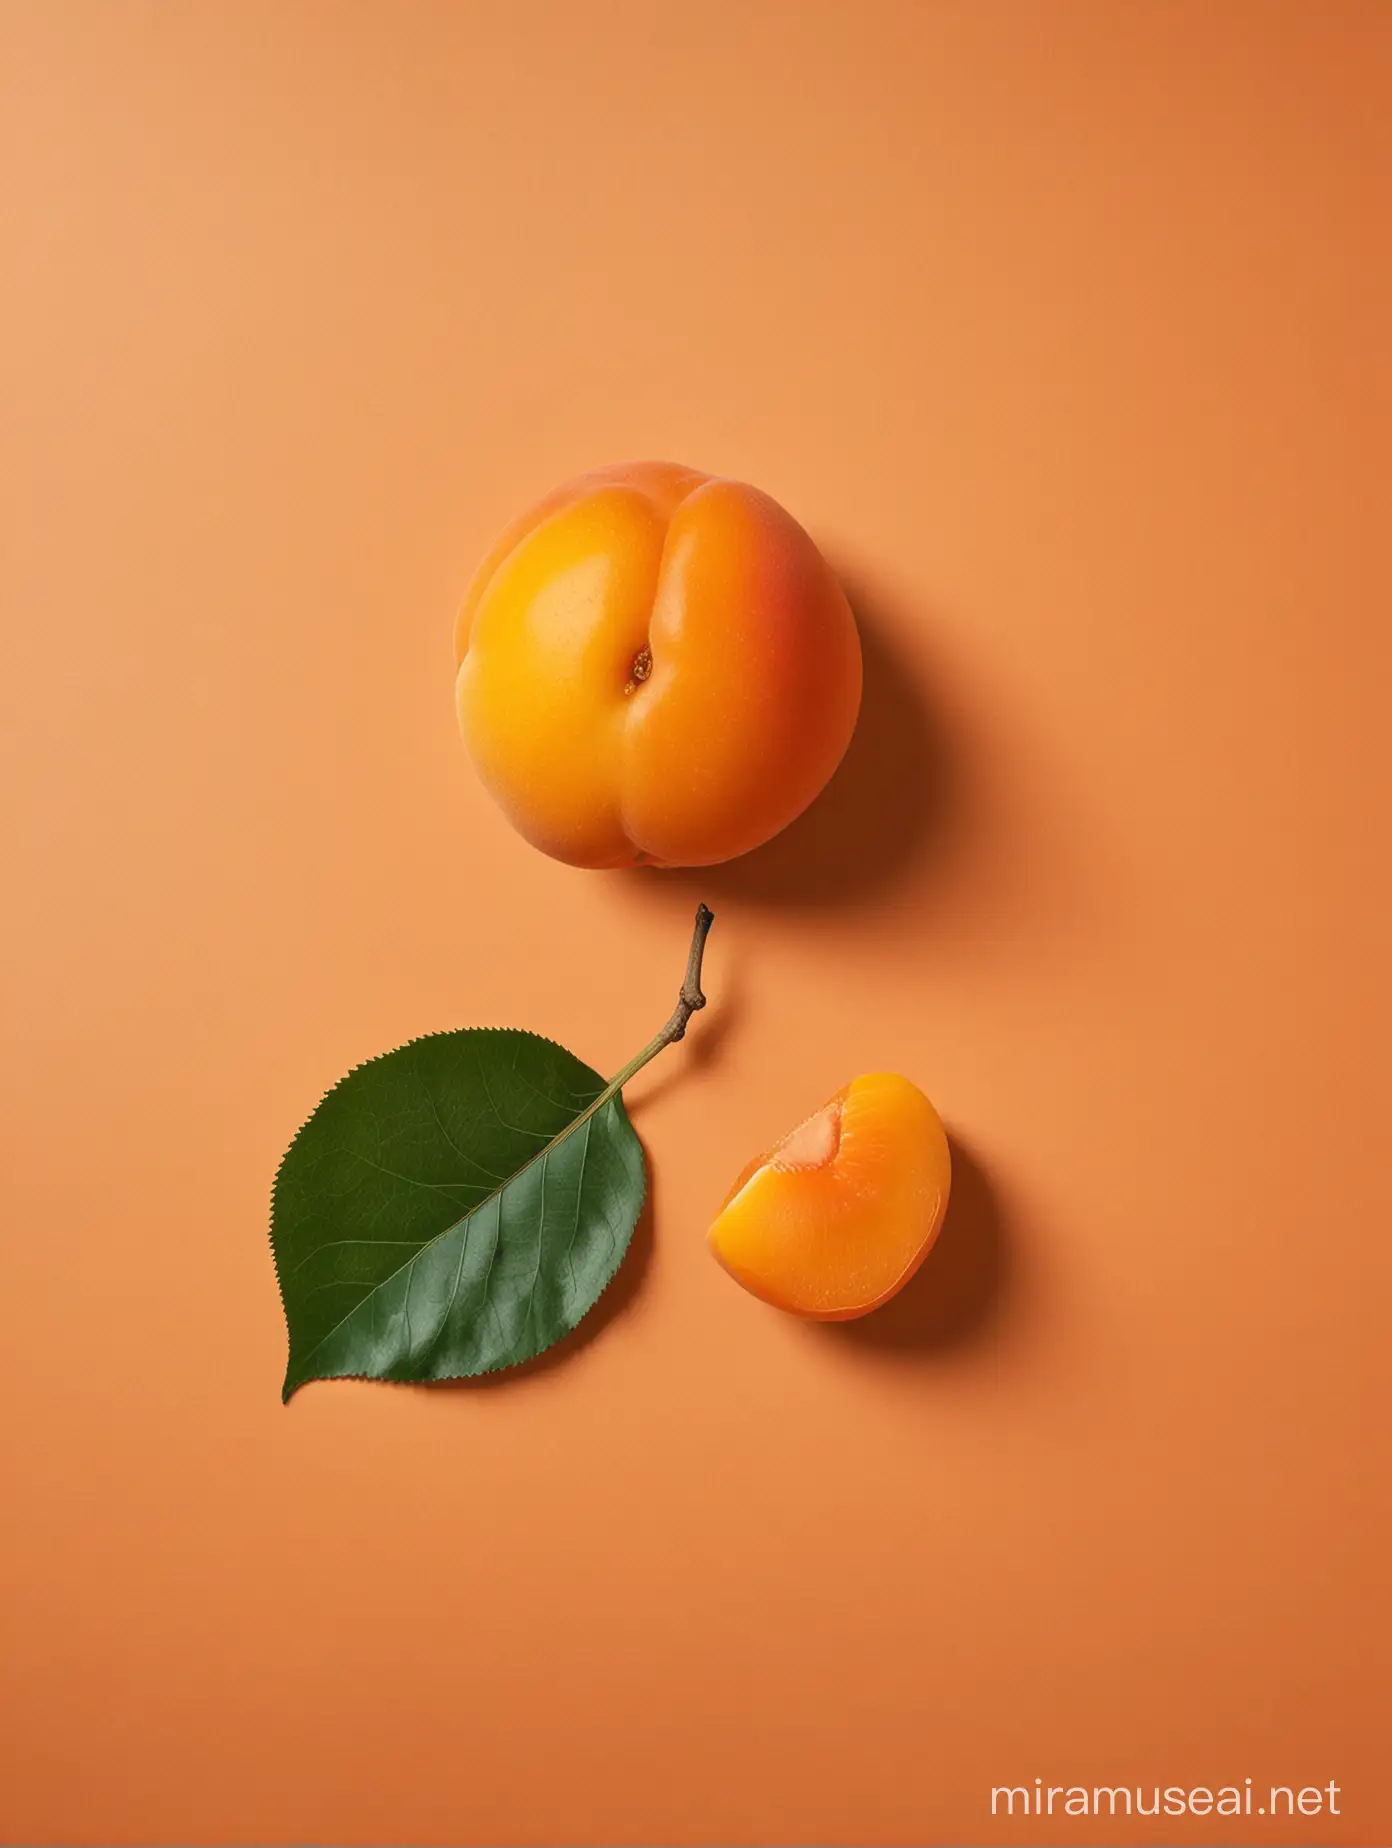 large size Apricot with leaf on orange background 